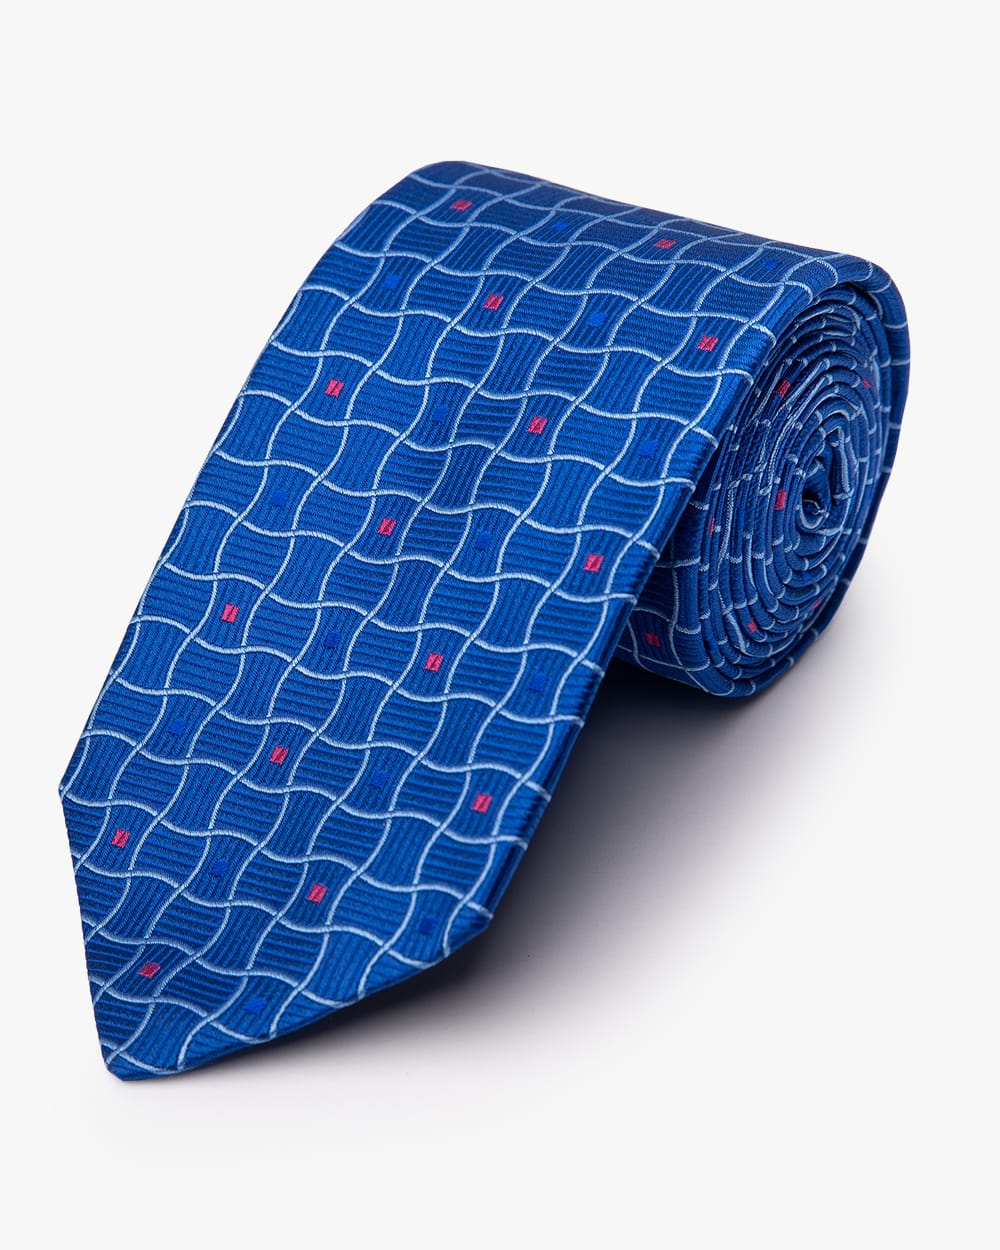 Royal Blue Wavy Grid Check Tie